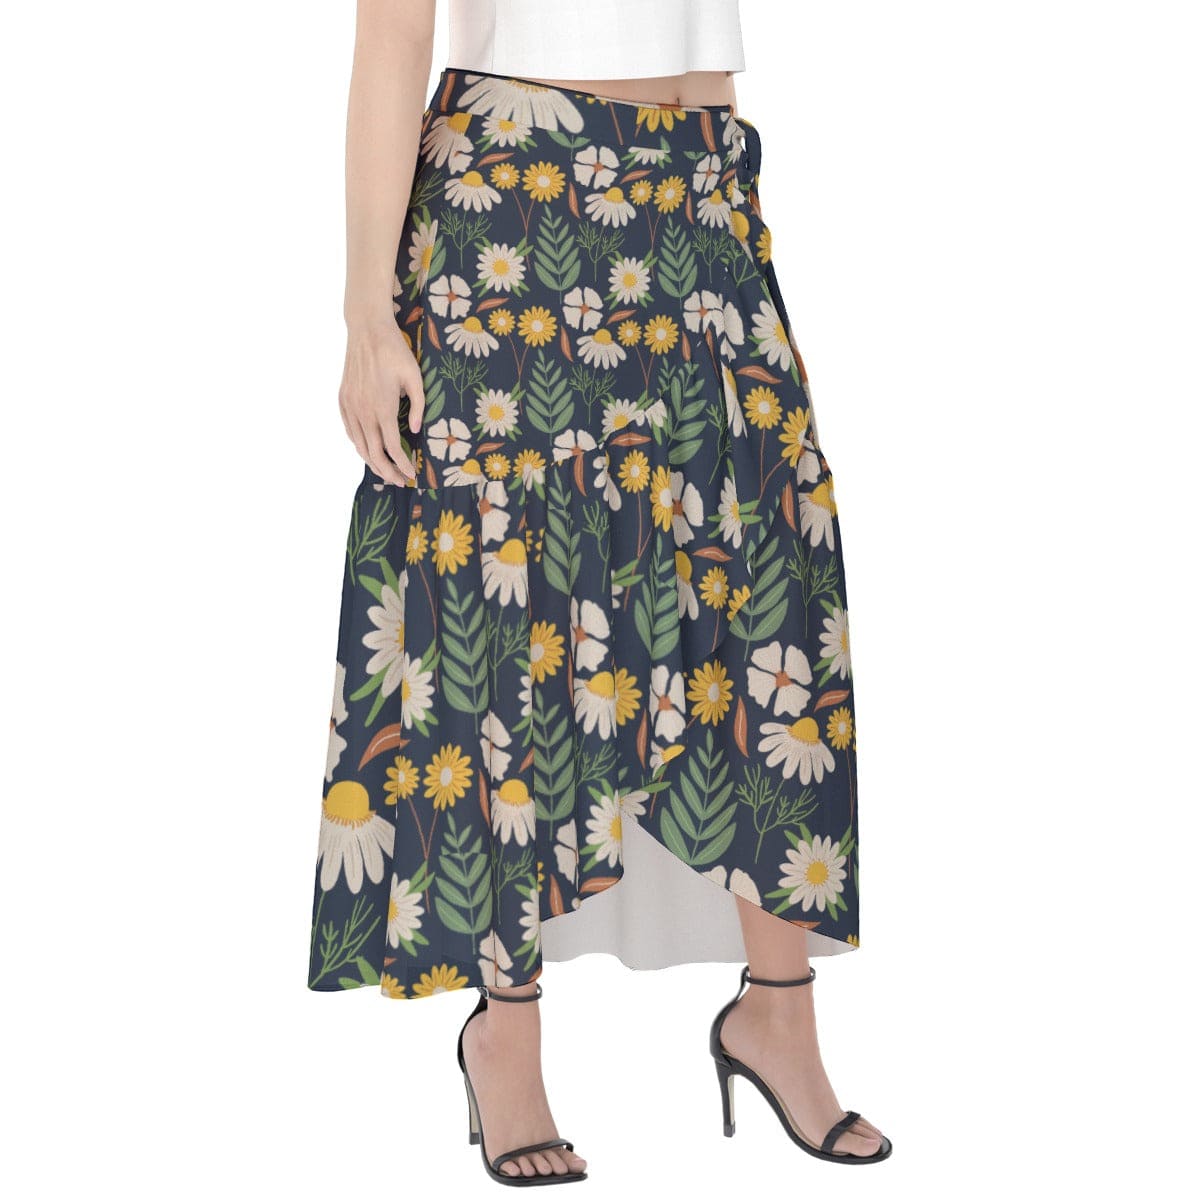 Yoycol Ecru Black Daisy - Women's Wrap Skirt